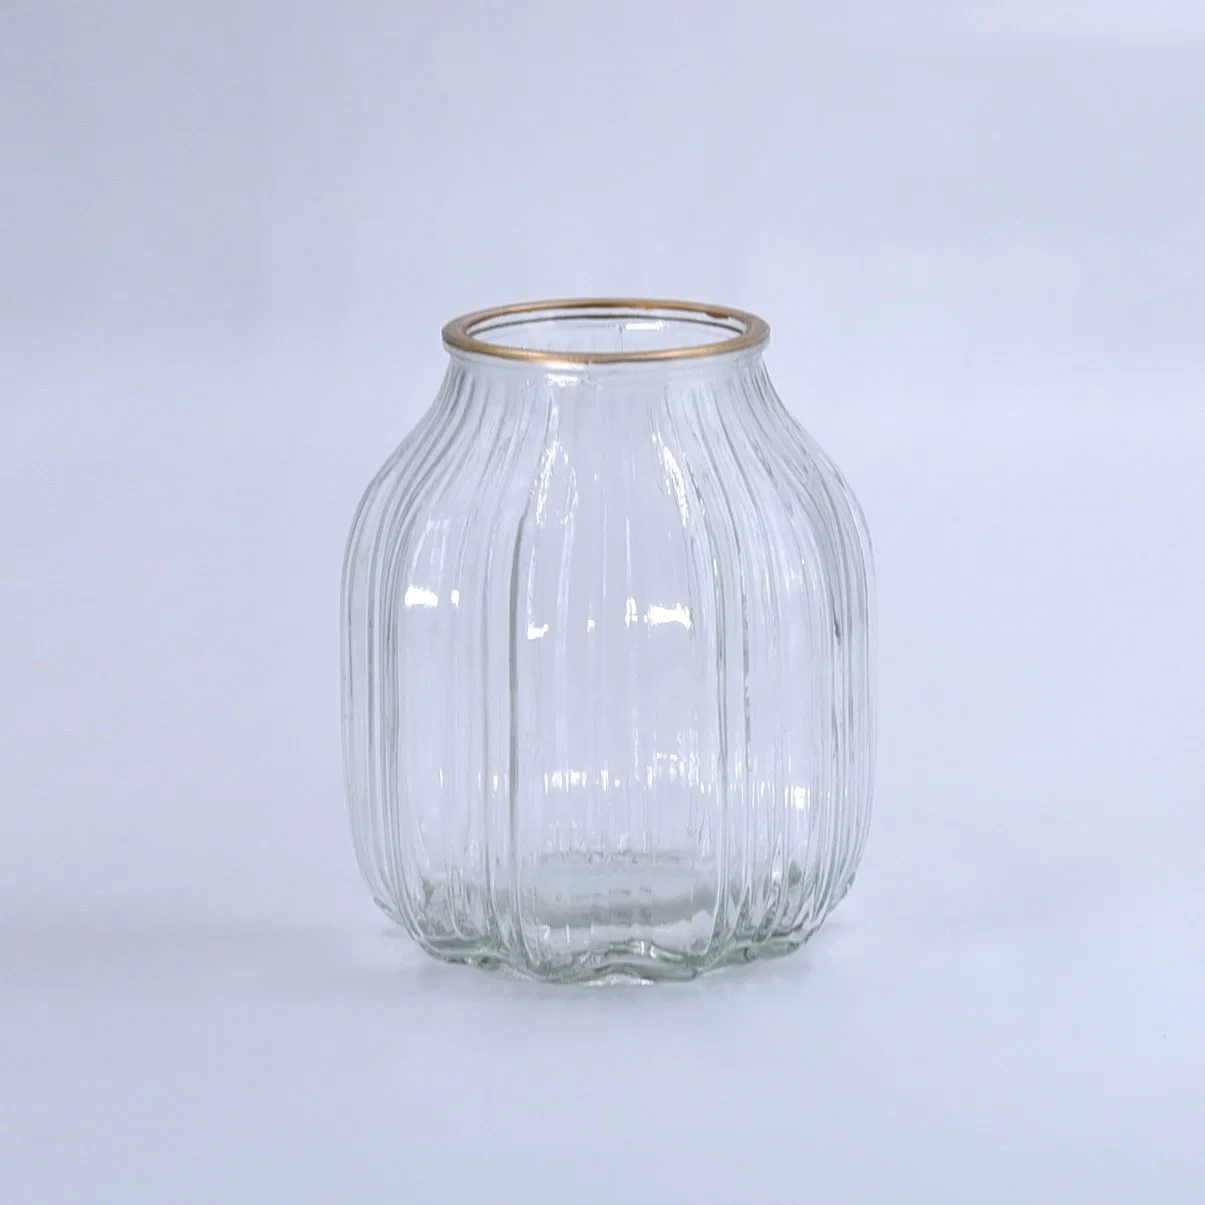 Flower Glass Vase Decorative Centerpiece for Home or Wedding, Planter Vase